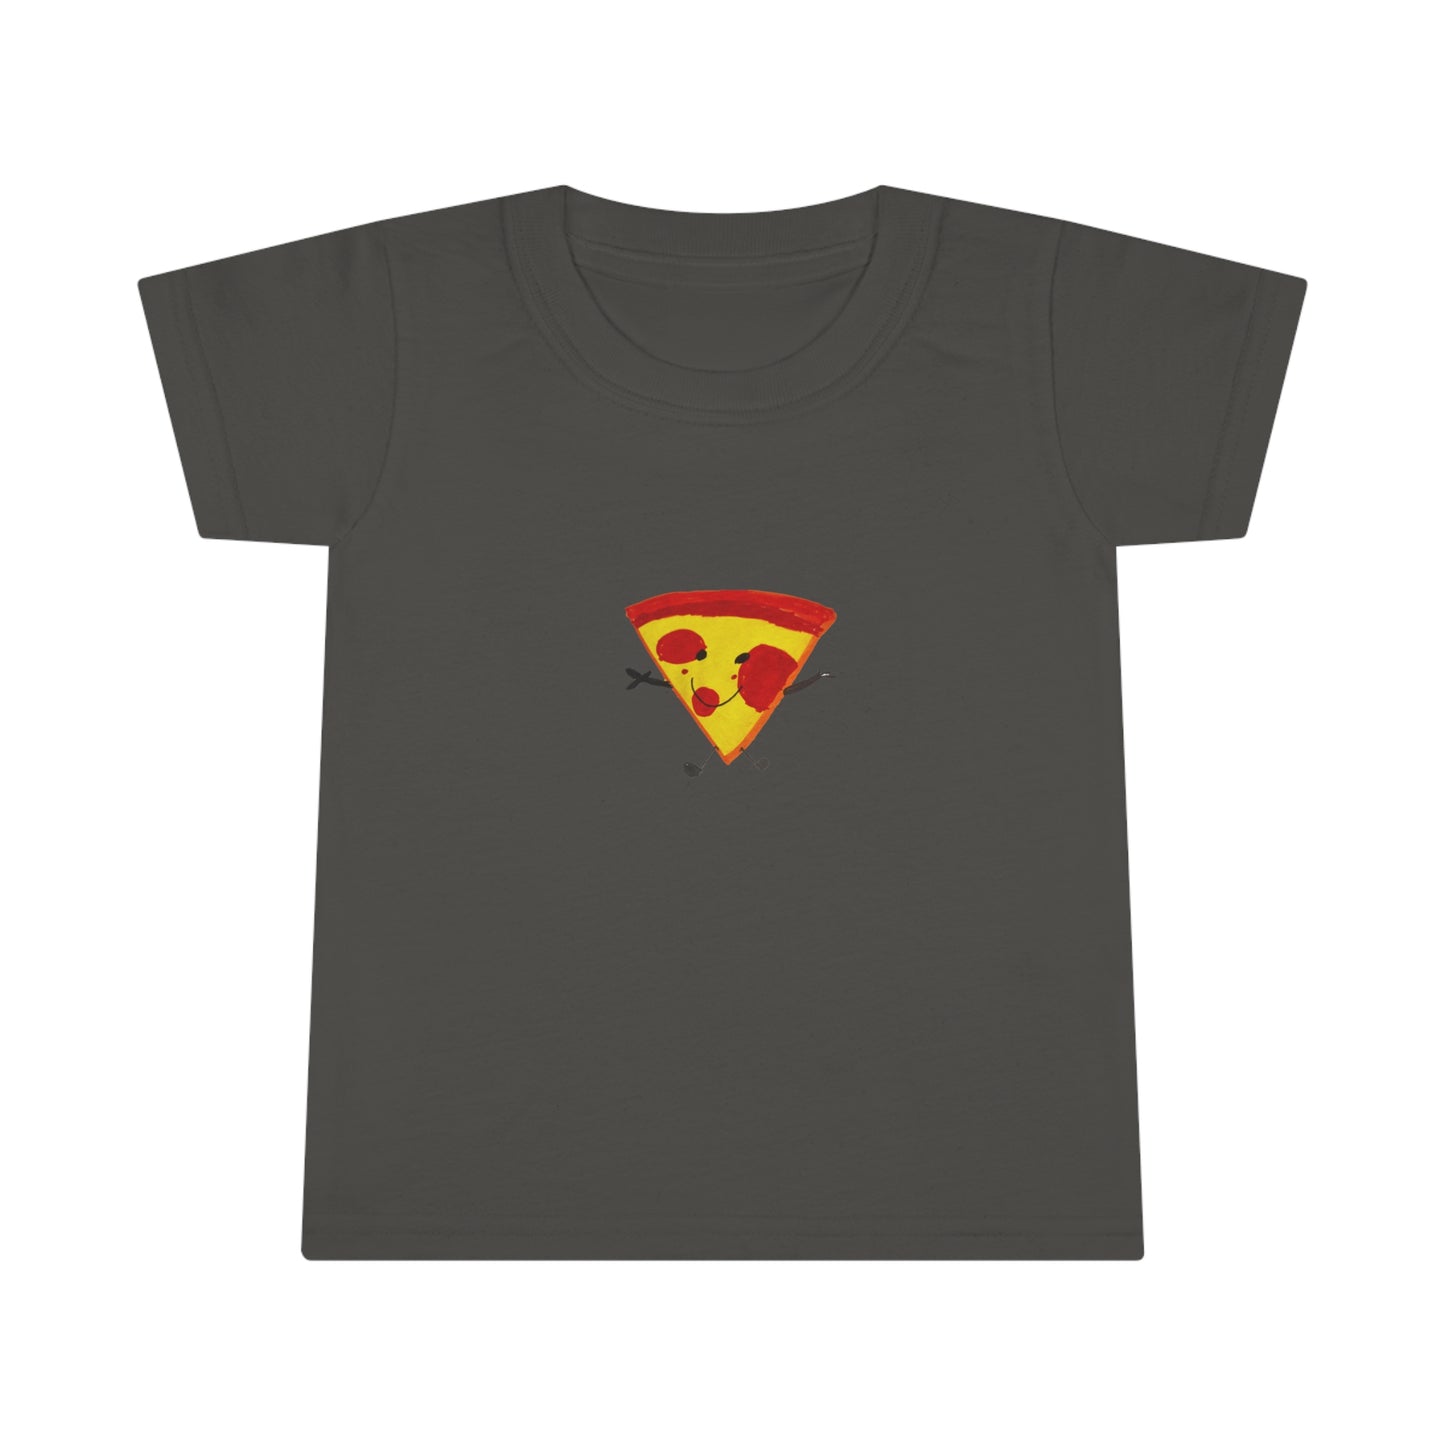 Pizza Cute & Soft Toddler T-shirt 2T - 6T